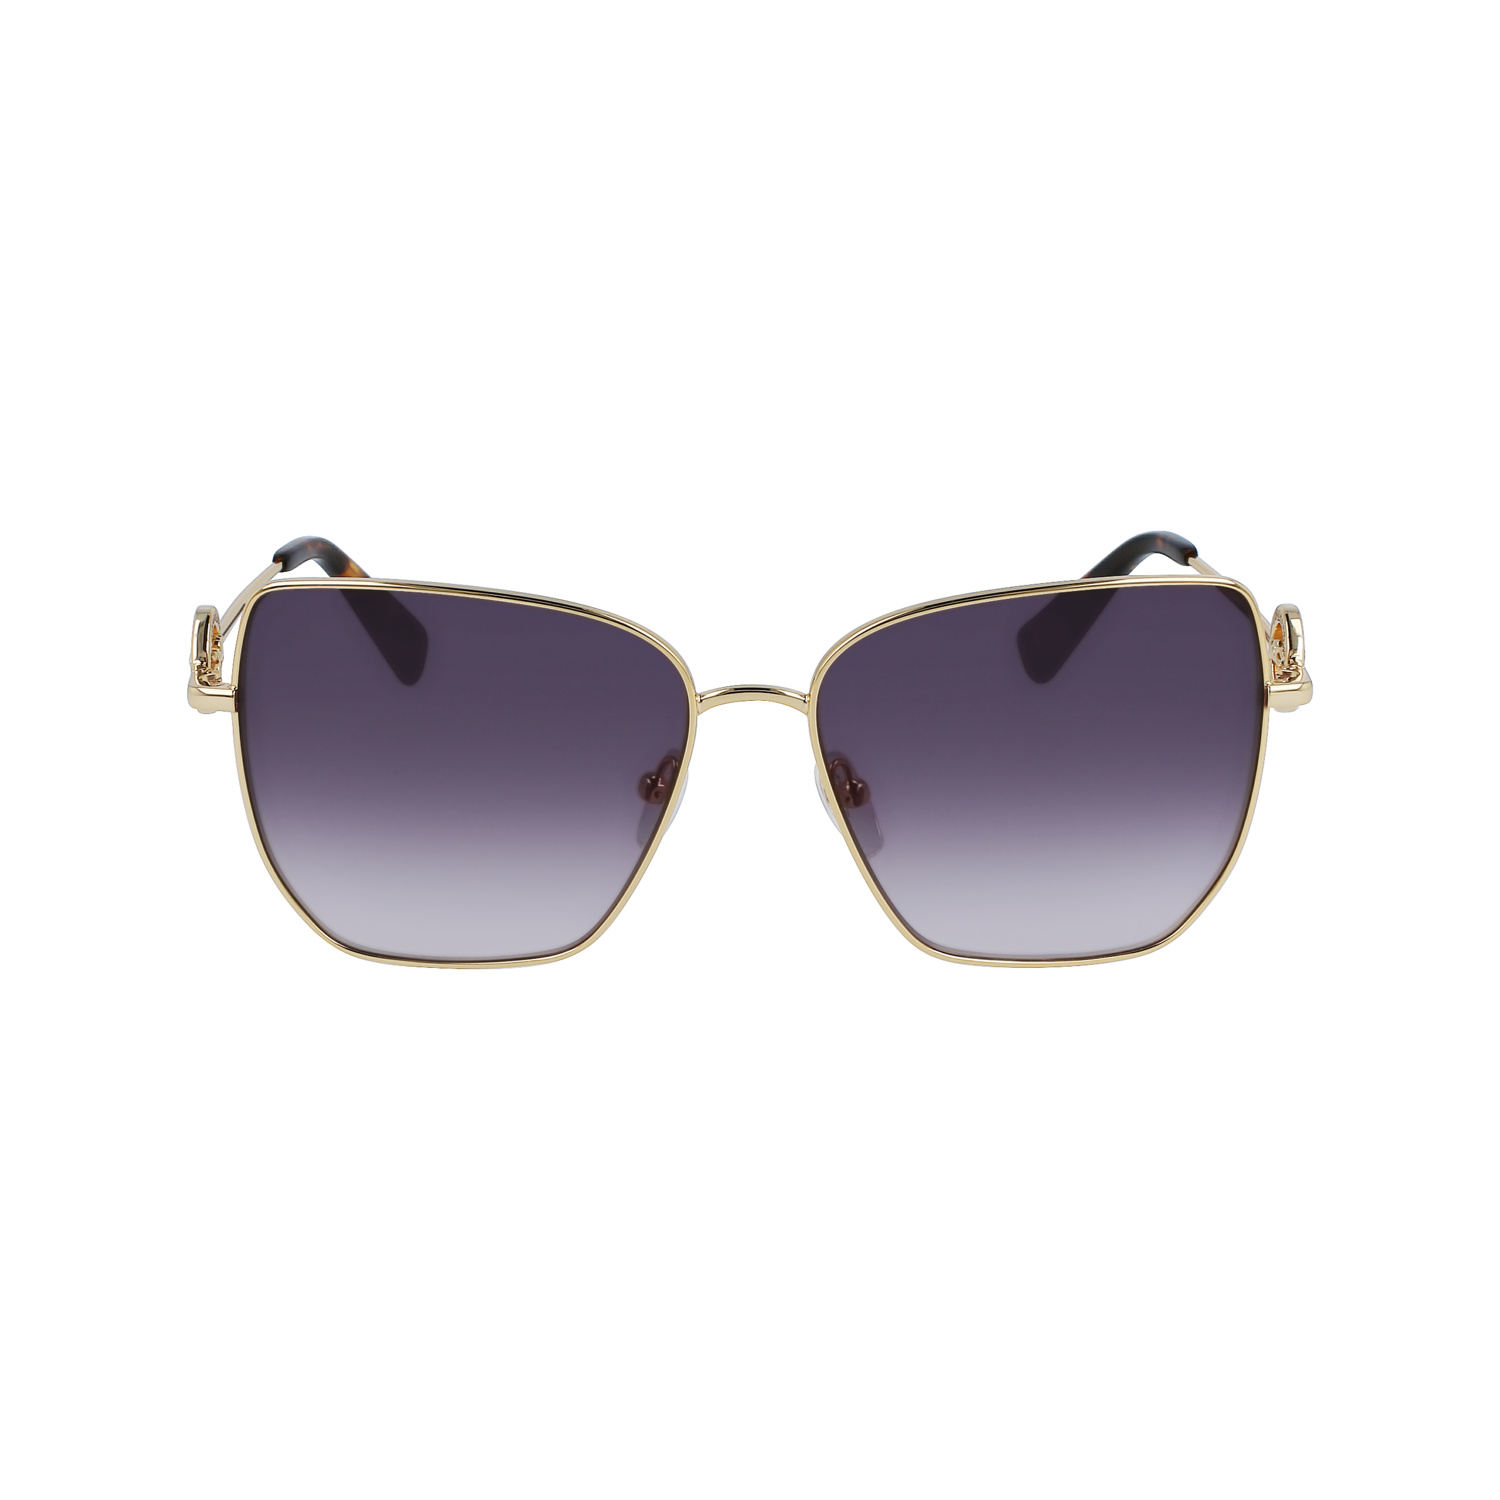 Longchamp Sunglasses In Gold/violet